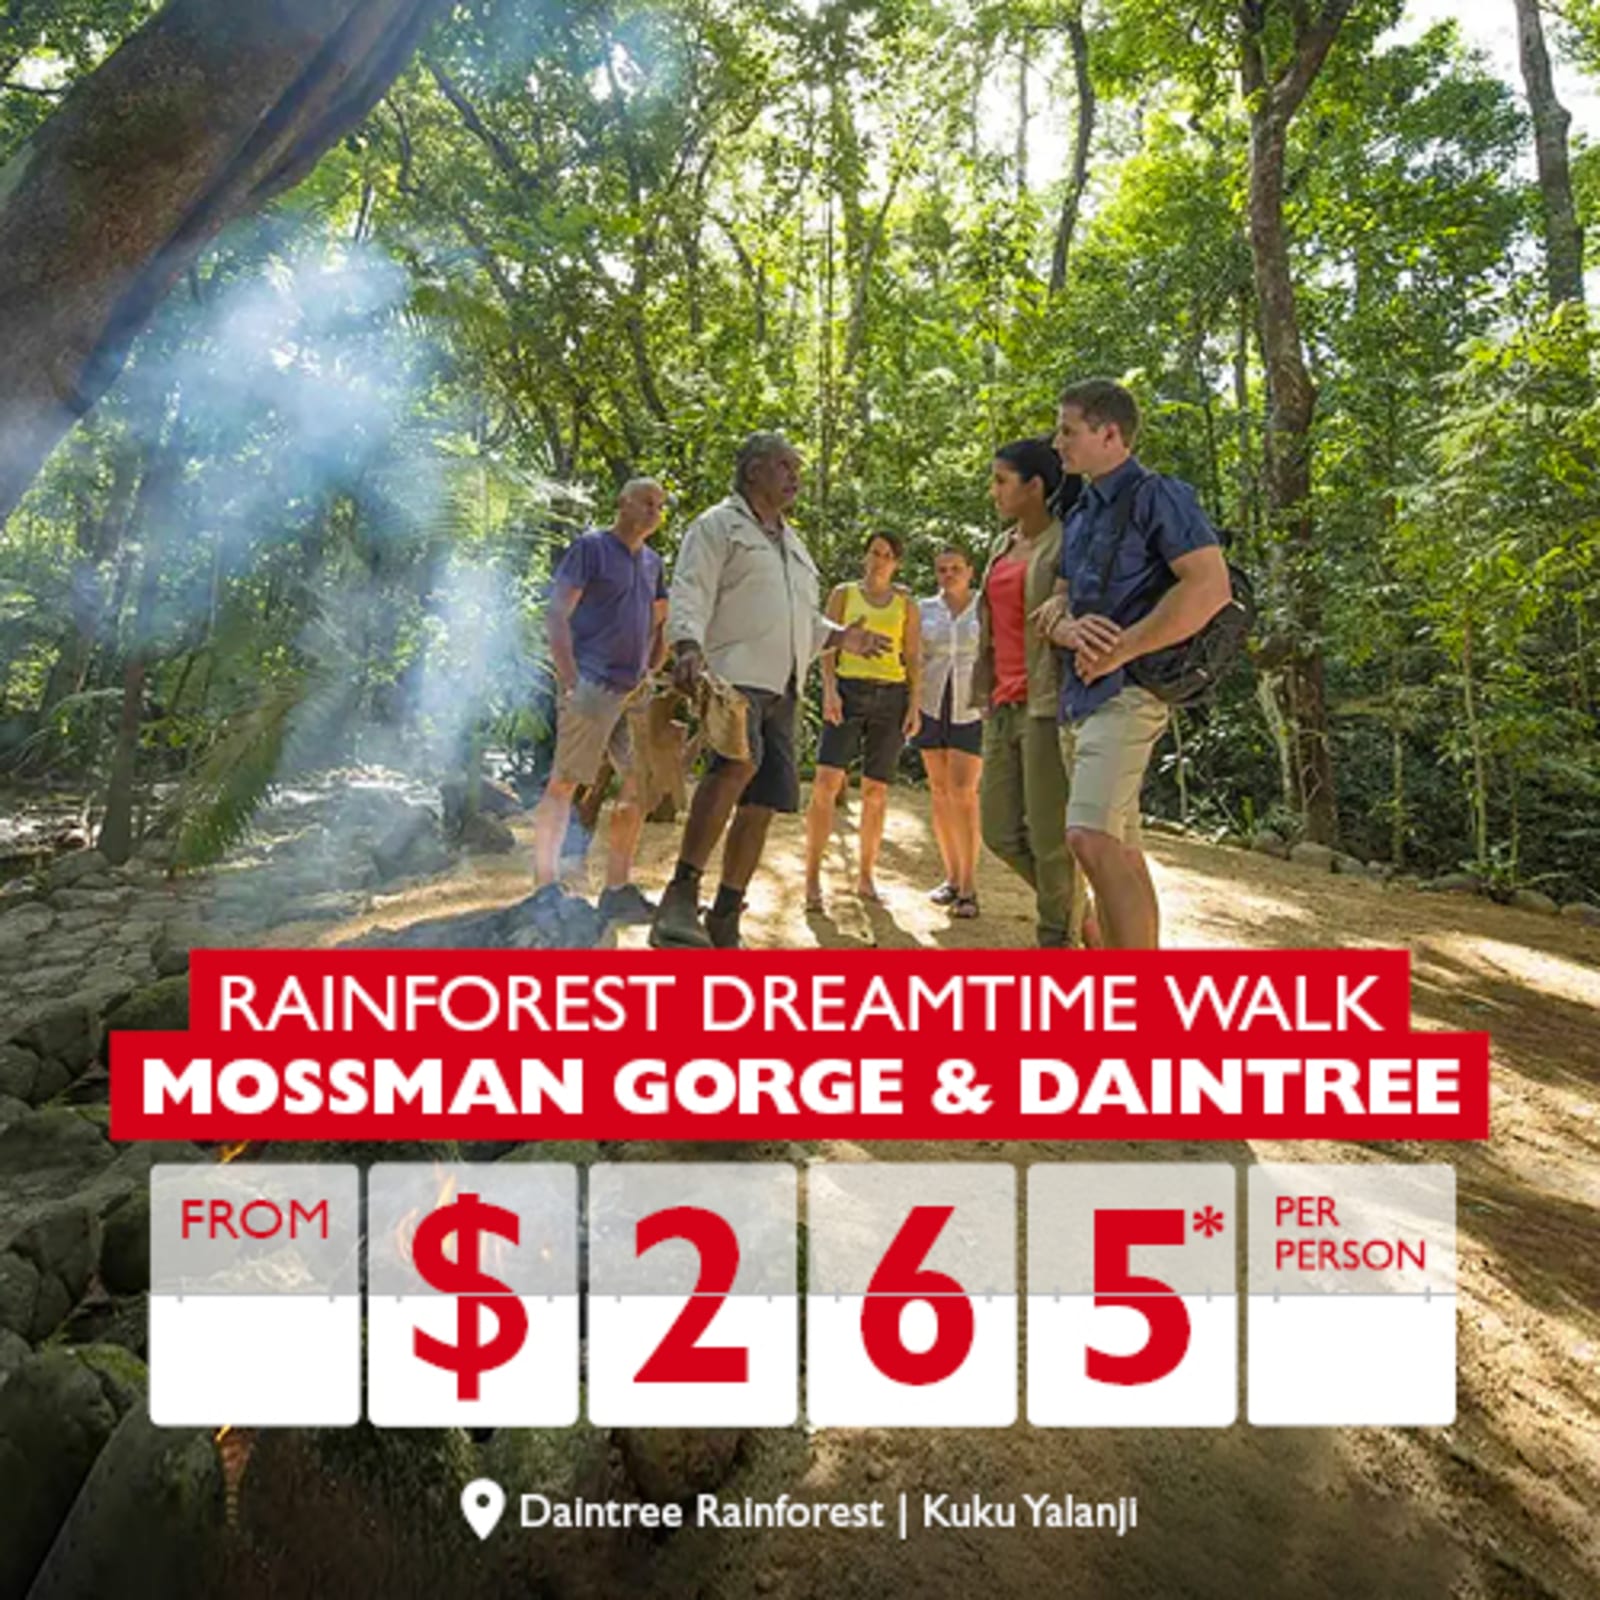 Rainforest Dreamtime walk | Mossman Gorge & Daintree from $265* per person